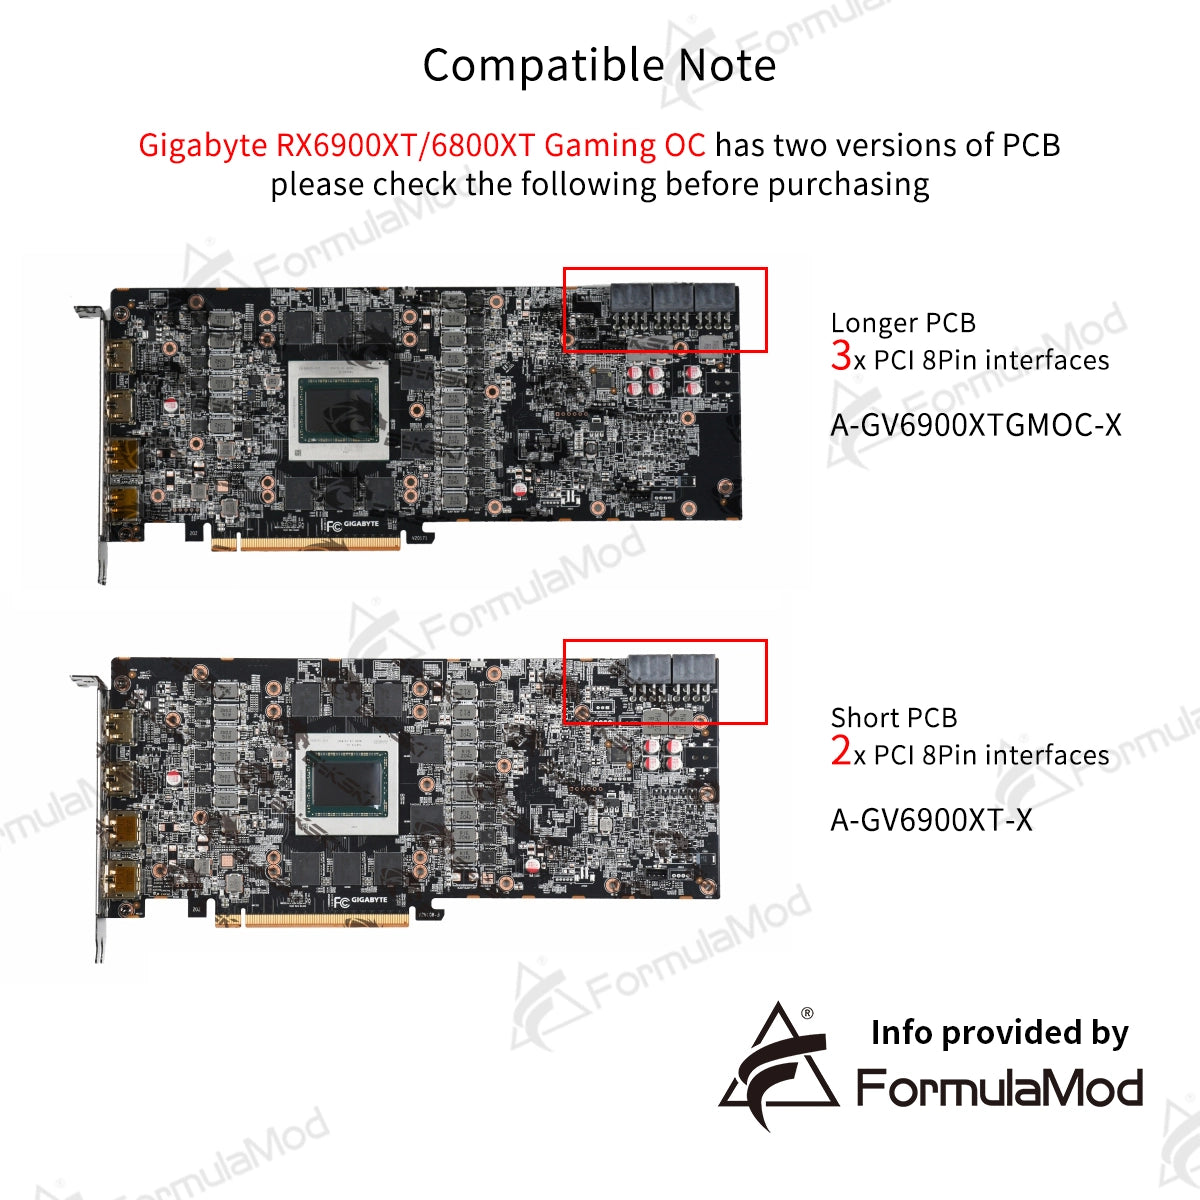 Bykski RX 6900XT GPU Water Block For Gigabyte RX 6950XT/6900XT Gaming OC , Full Cover Graphic Card Water Cooler A-GV6900XTGMOC-X